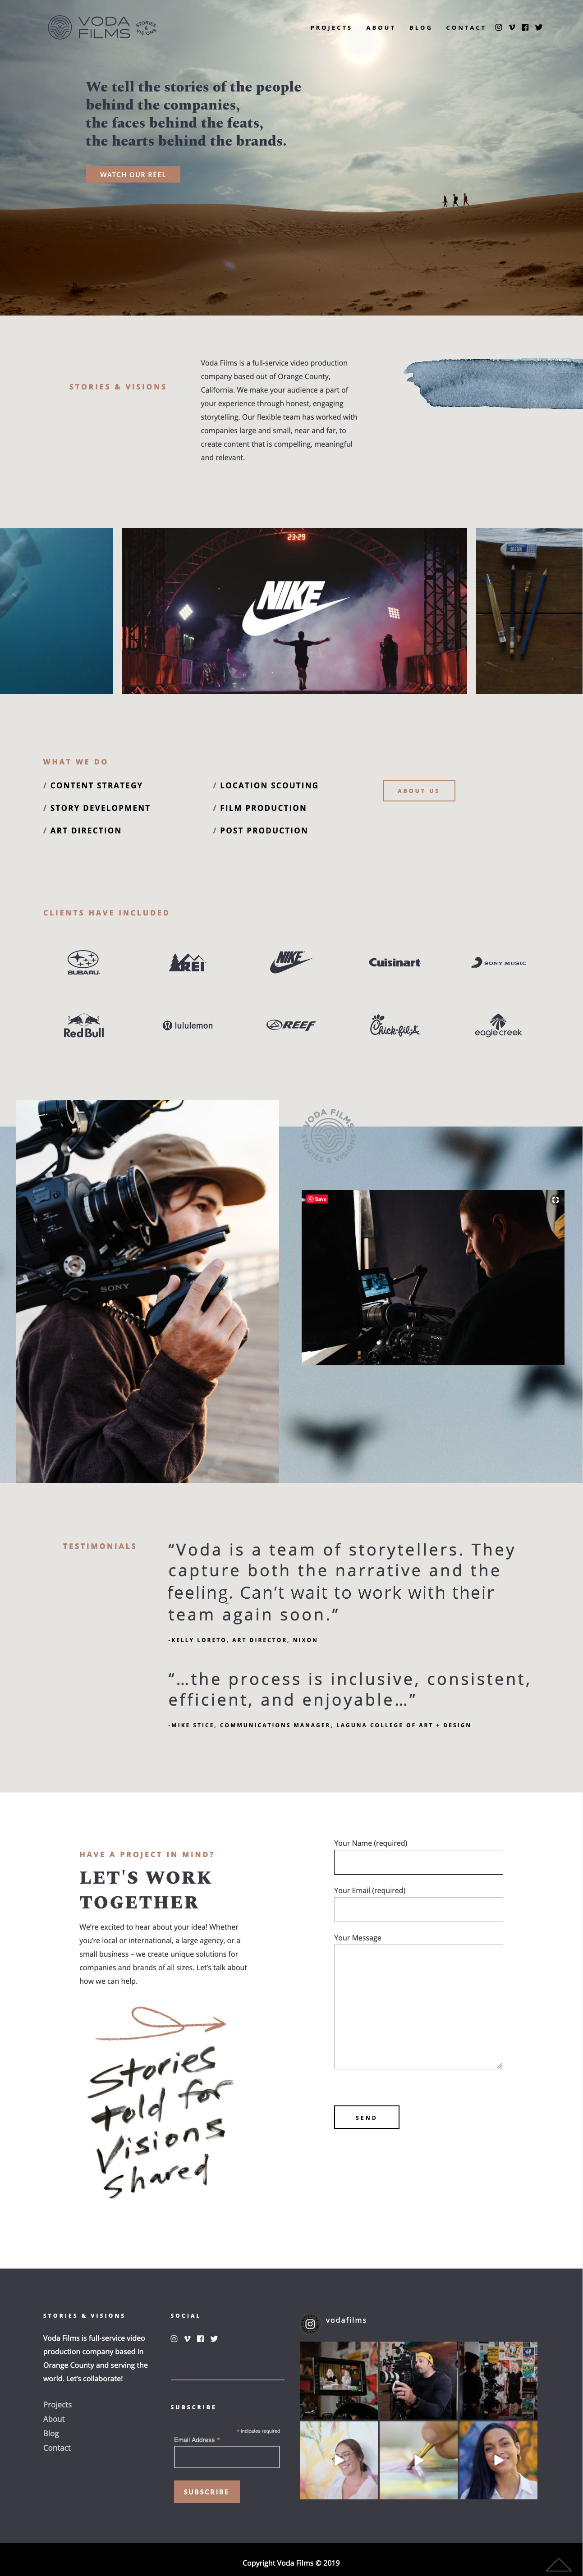 Voda films website